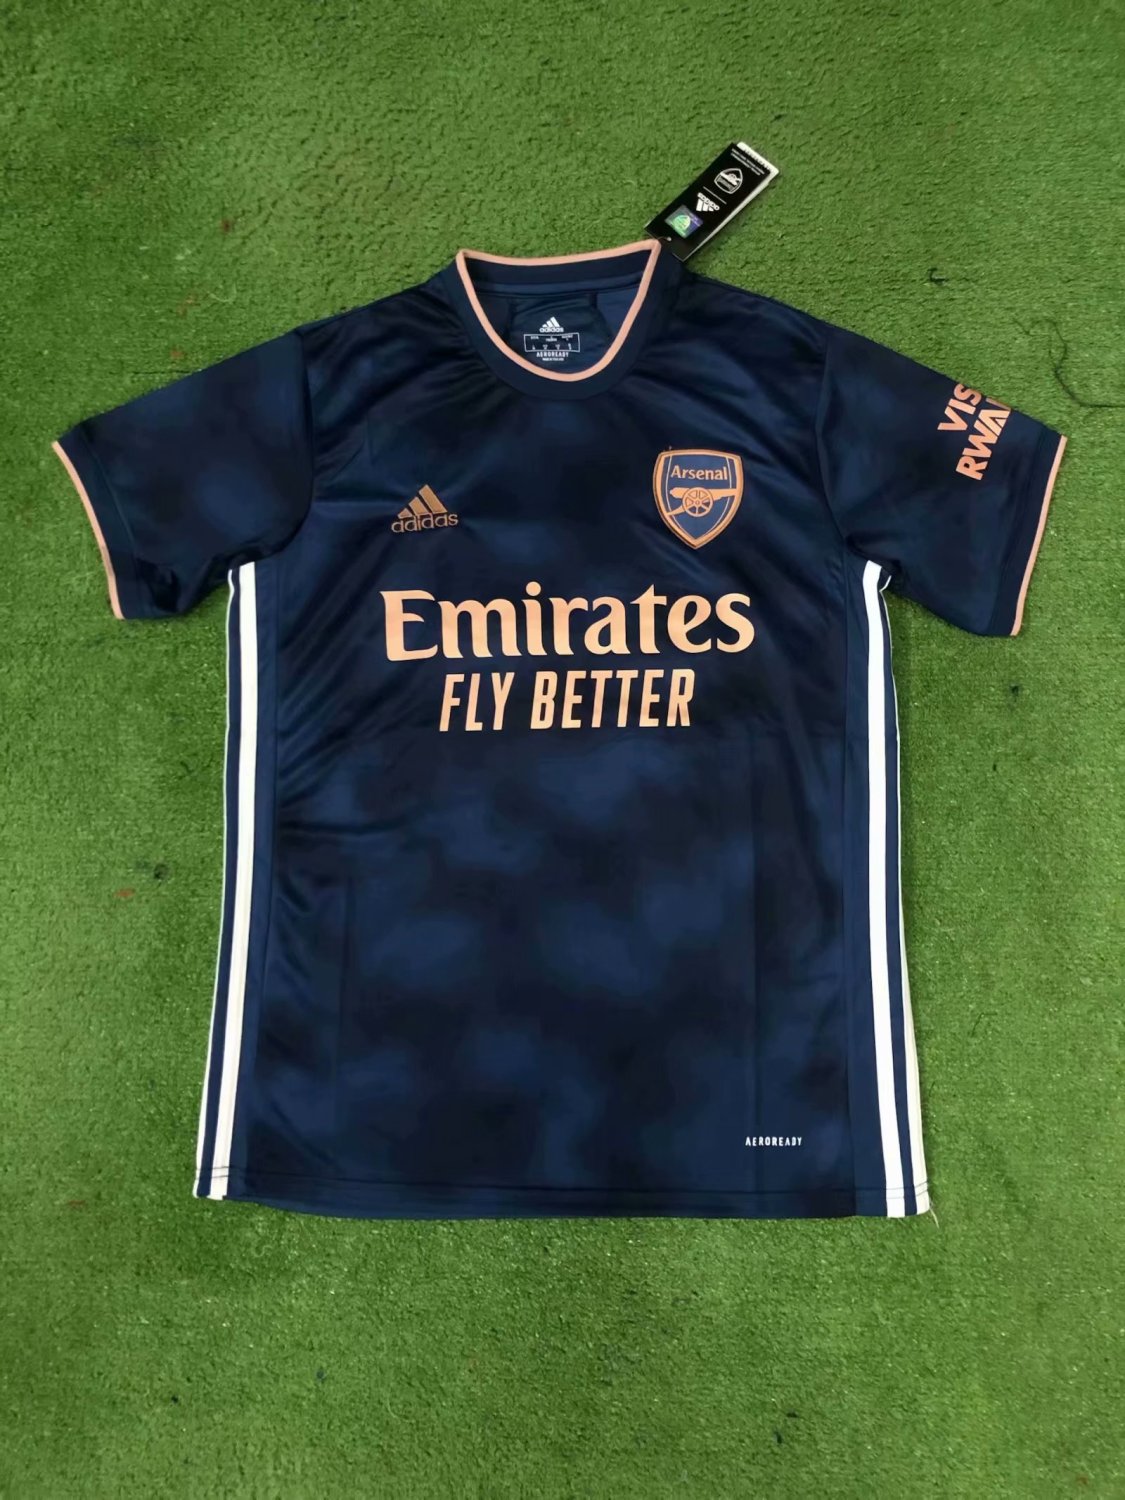 20/21 New Adult Thai version Arsenal dark blue club soccer jersey ...